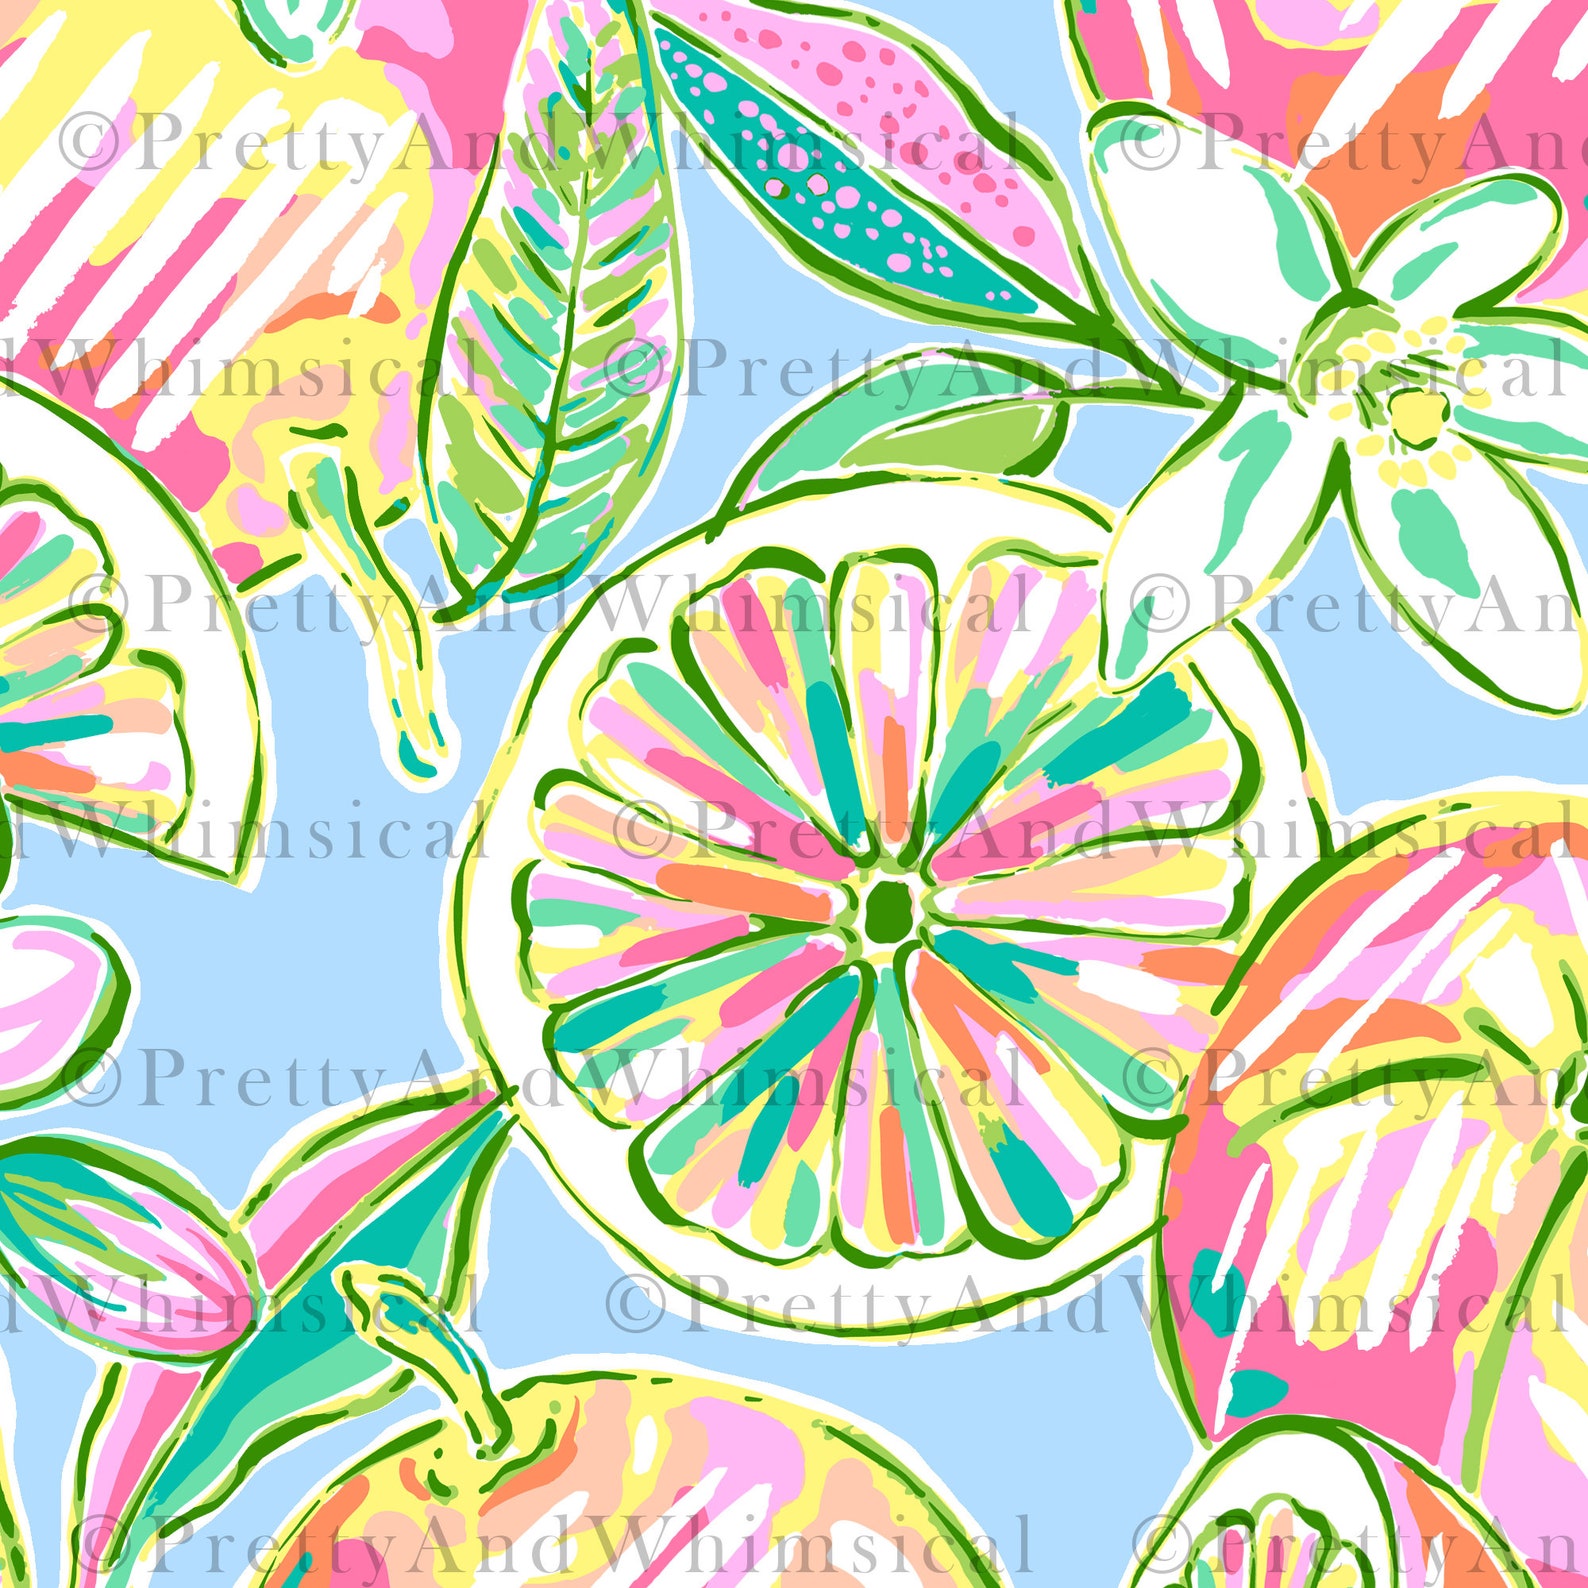 INSTANT DOWNLOAD Preppy Citrus Fruit Pattern Seamless - Etsy